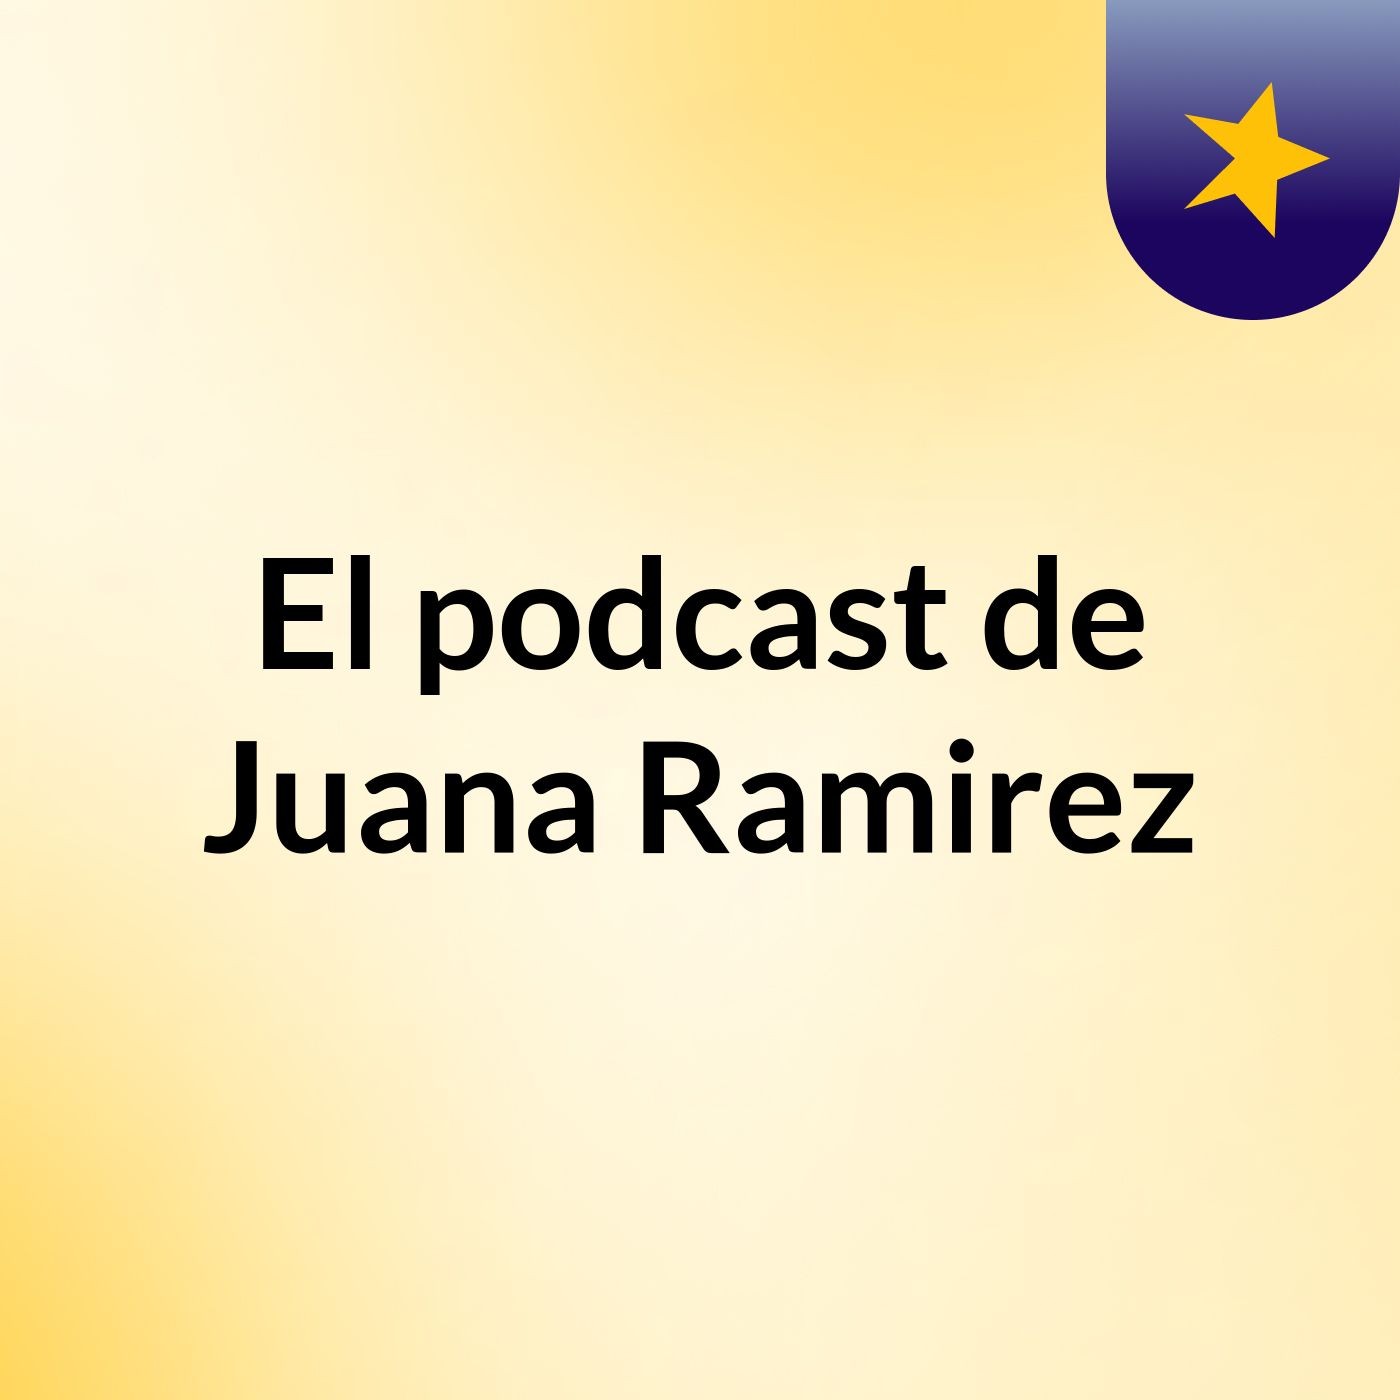 El podcast de Juana Ramirez